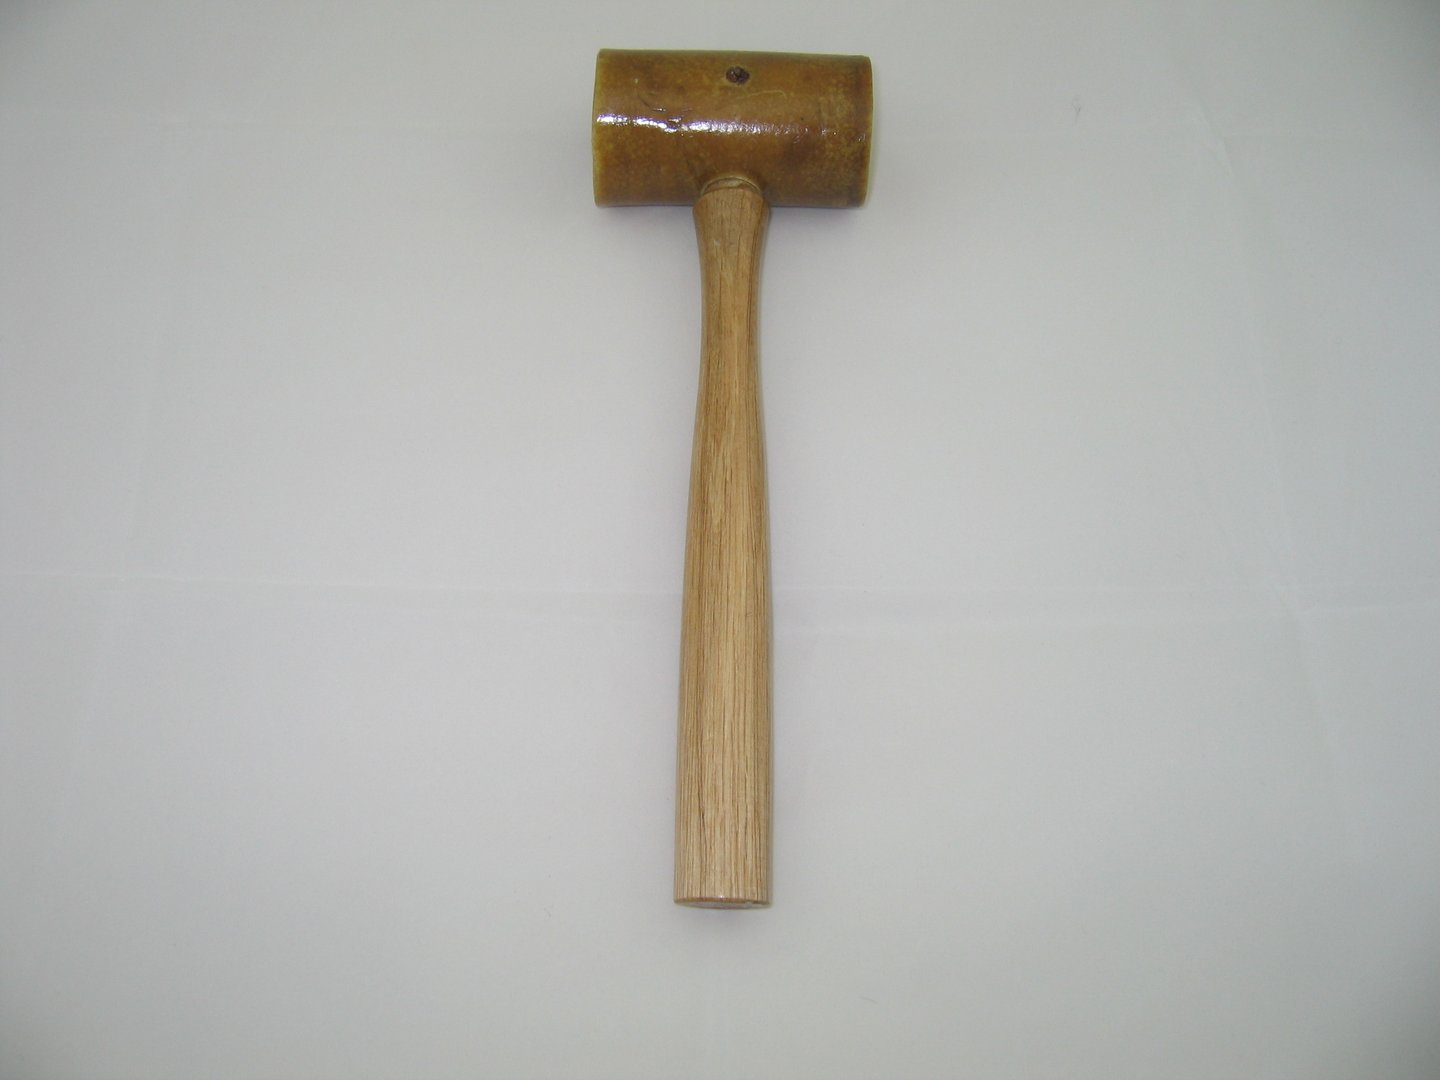 Cutting Handarbeit Punzierhammer Hammer Beveling Rohhauthammer Leder Werkzeug 